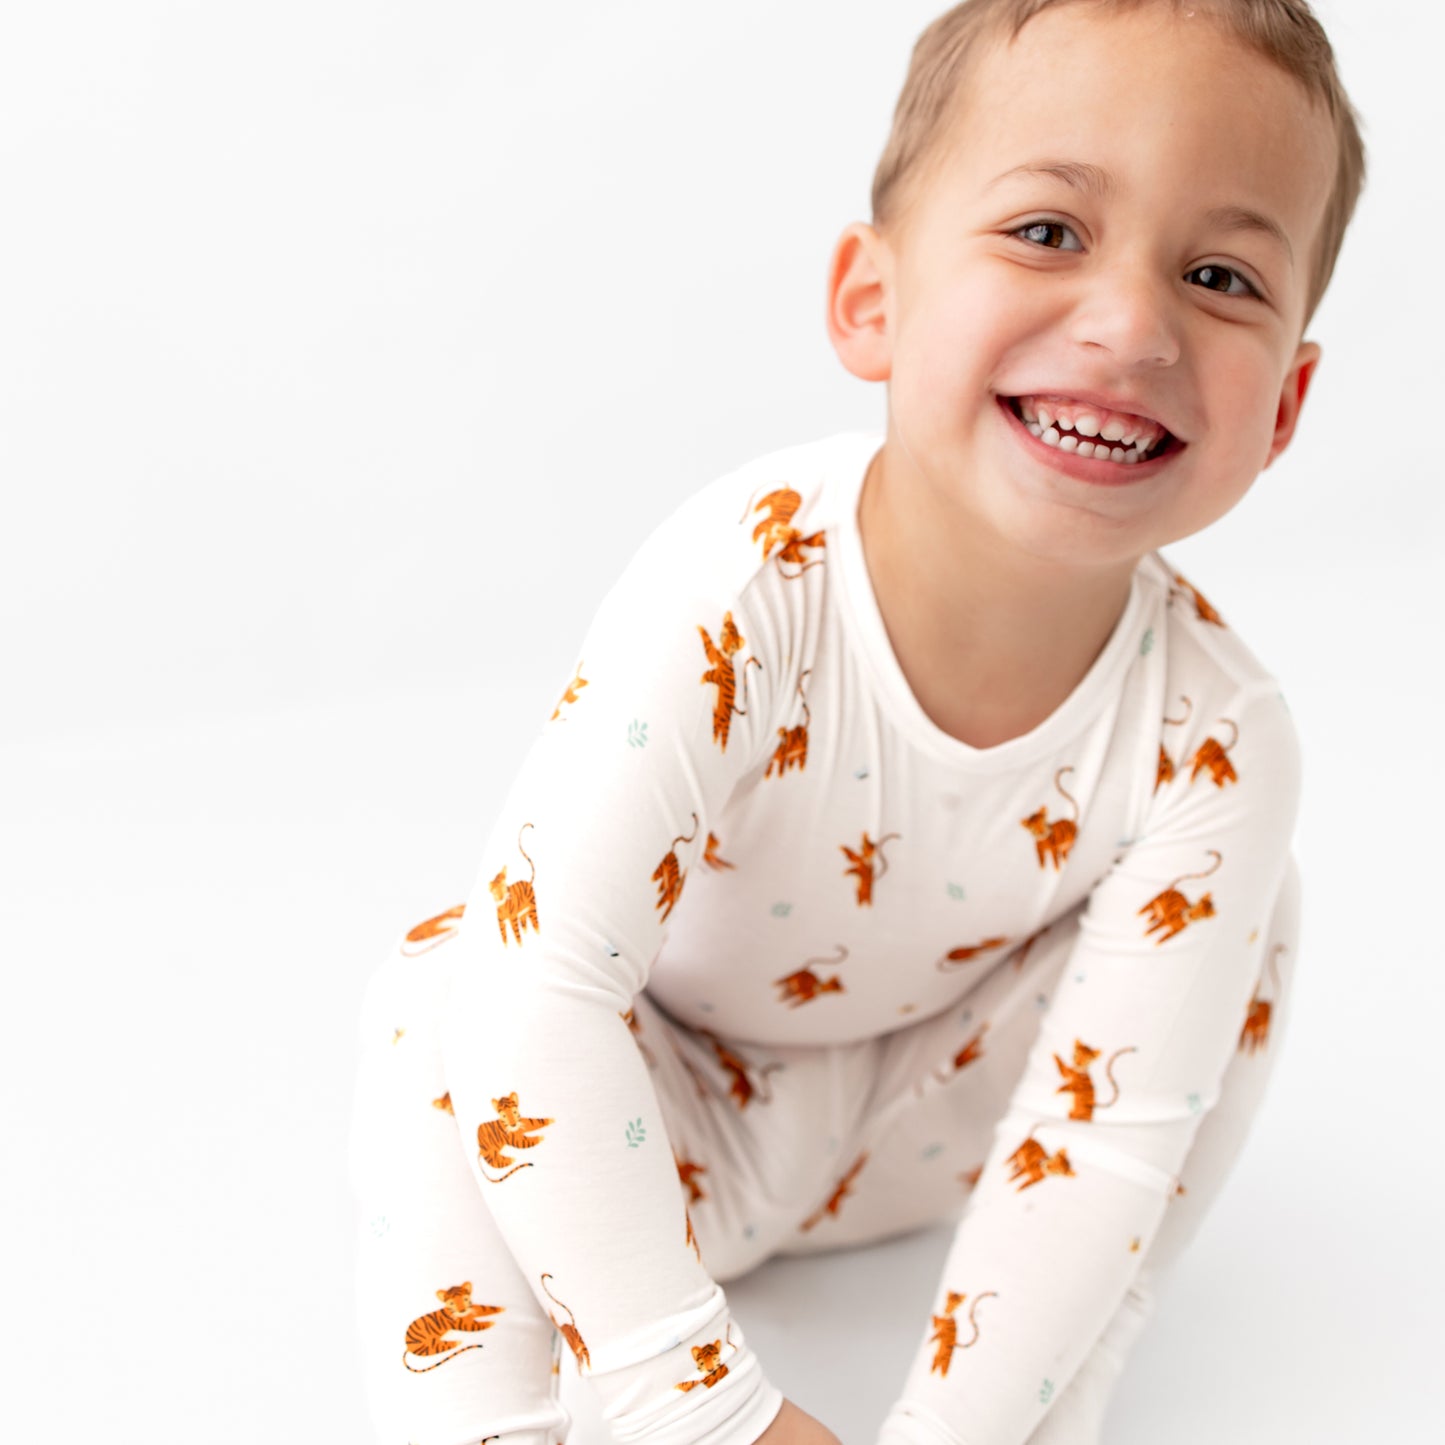 Tiger Pajama Set